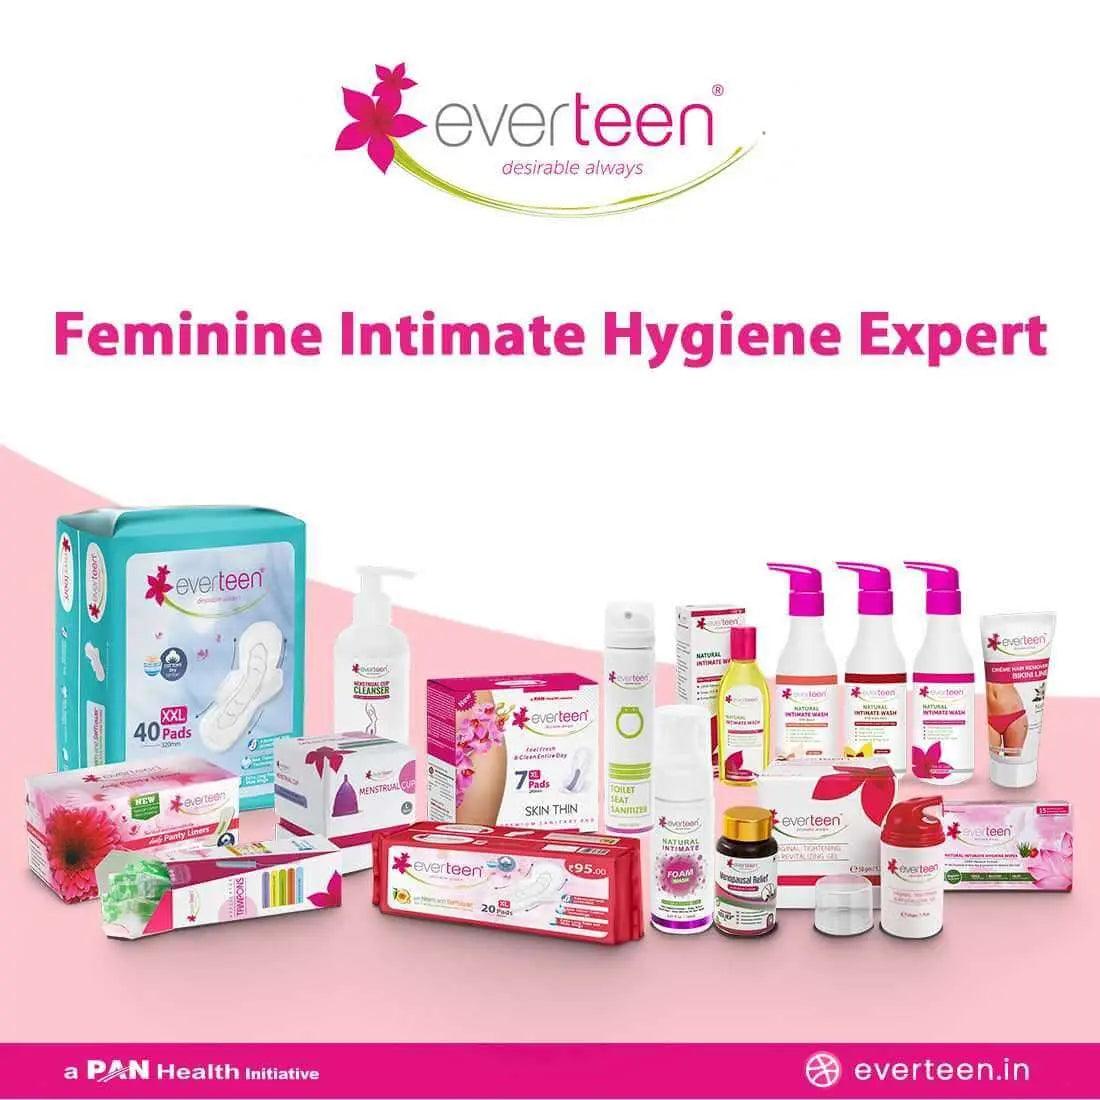 everteen Applicator Tampons for Menstrual Periods in Women